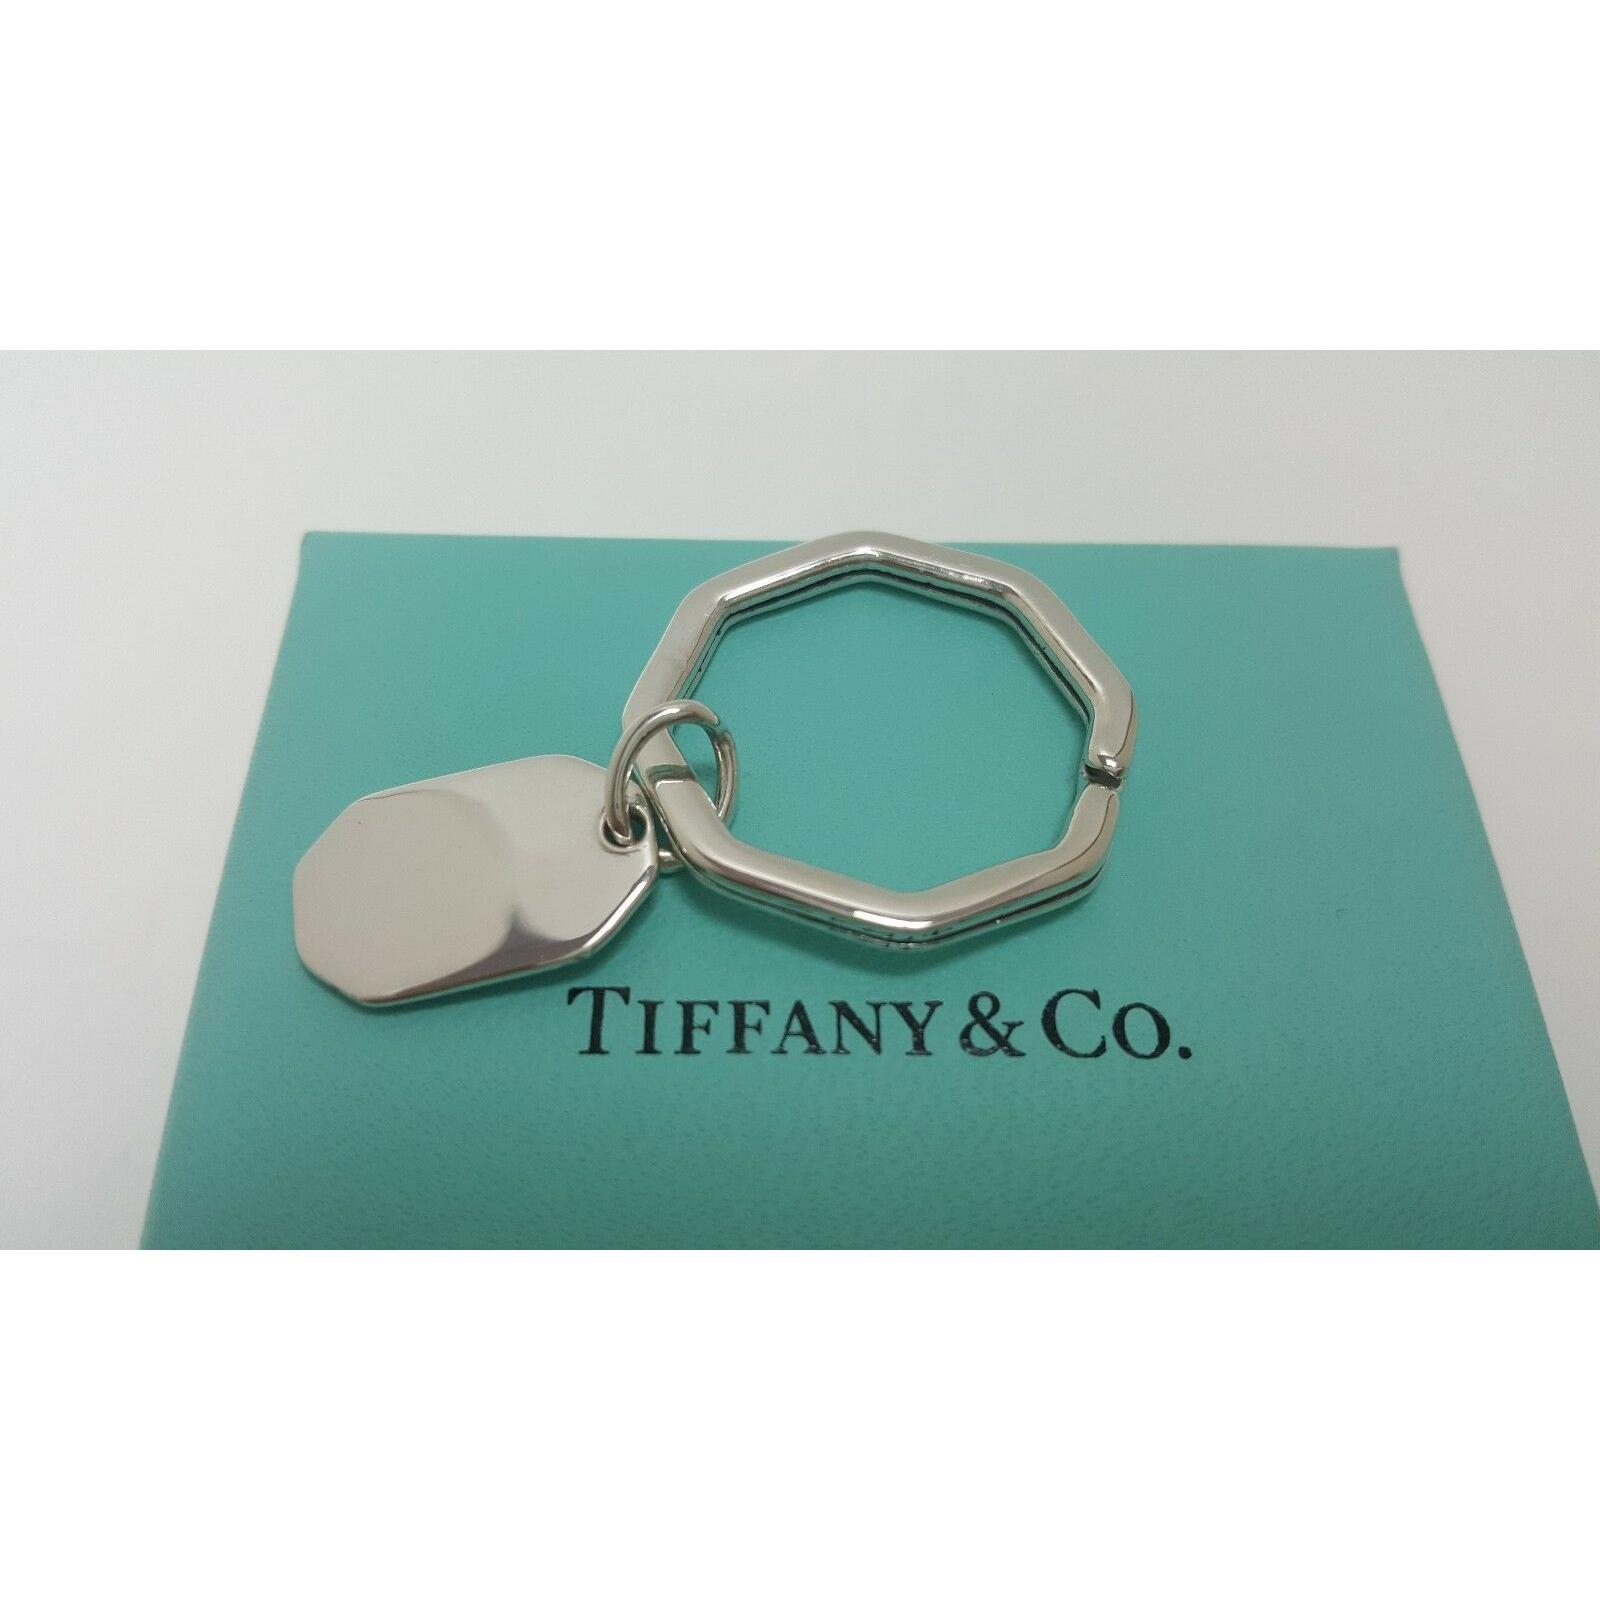 Tiffany & Co. 925 Sterling Silver Key Chain Key Ring Octagon